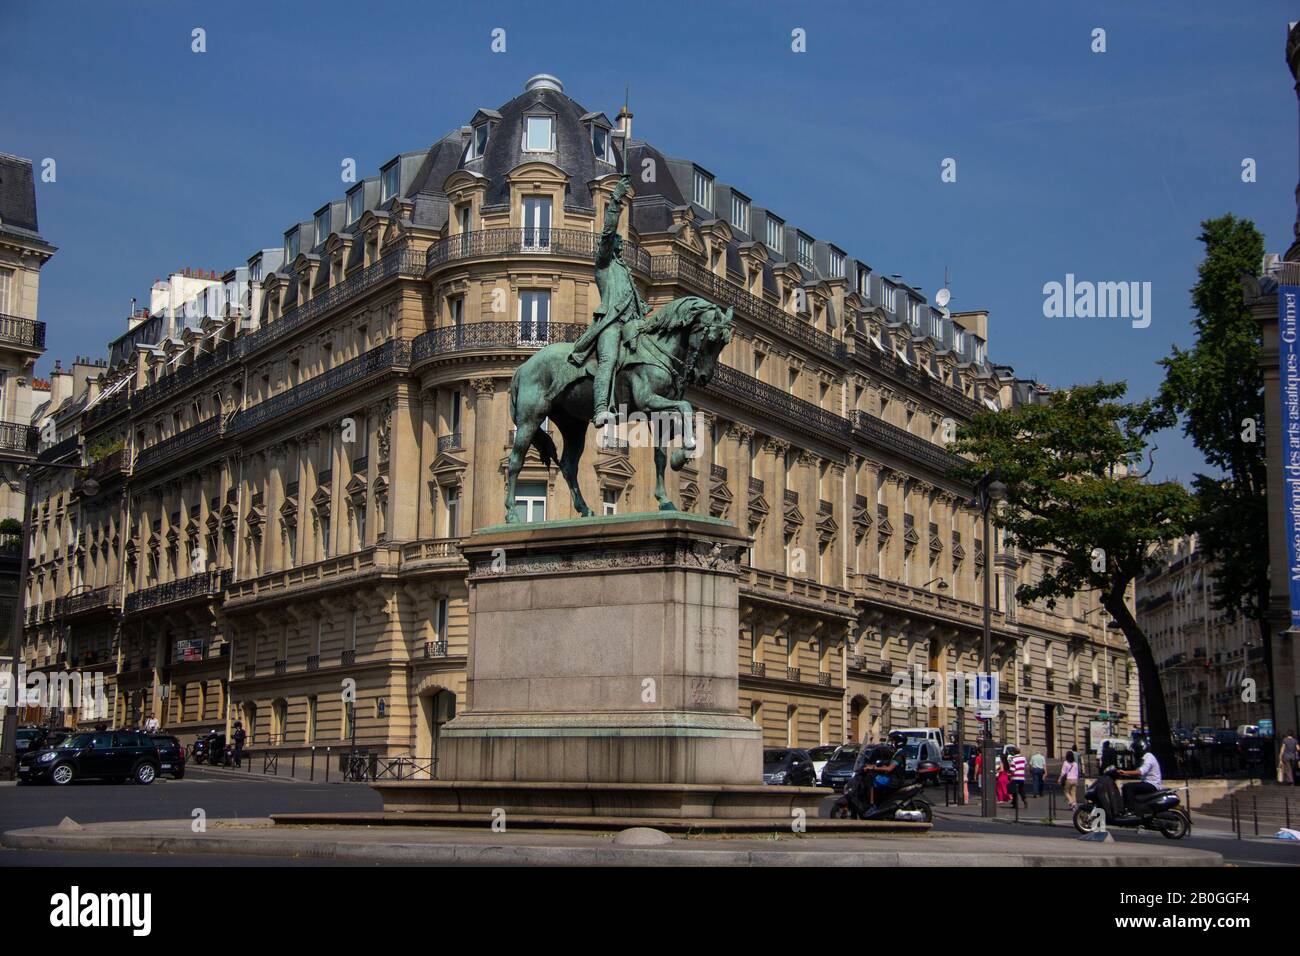 Statue of George Washington on a horse, Paris Stock Photo